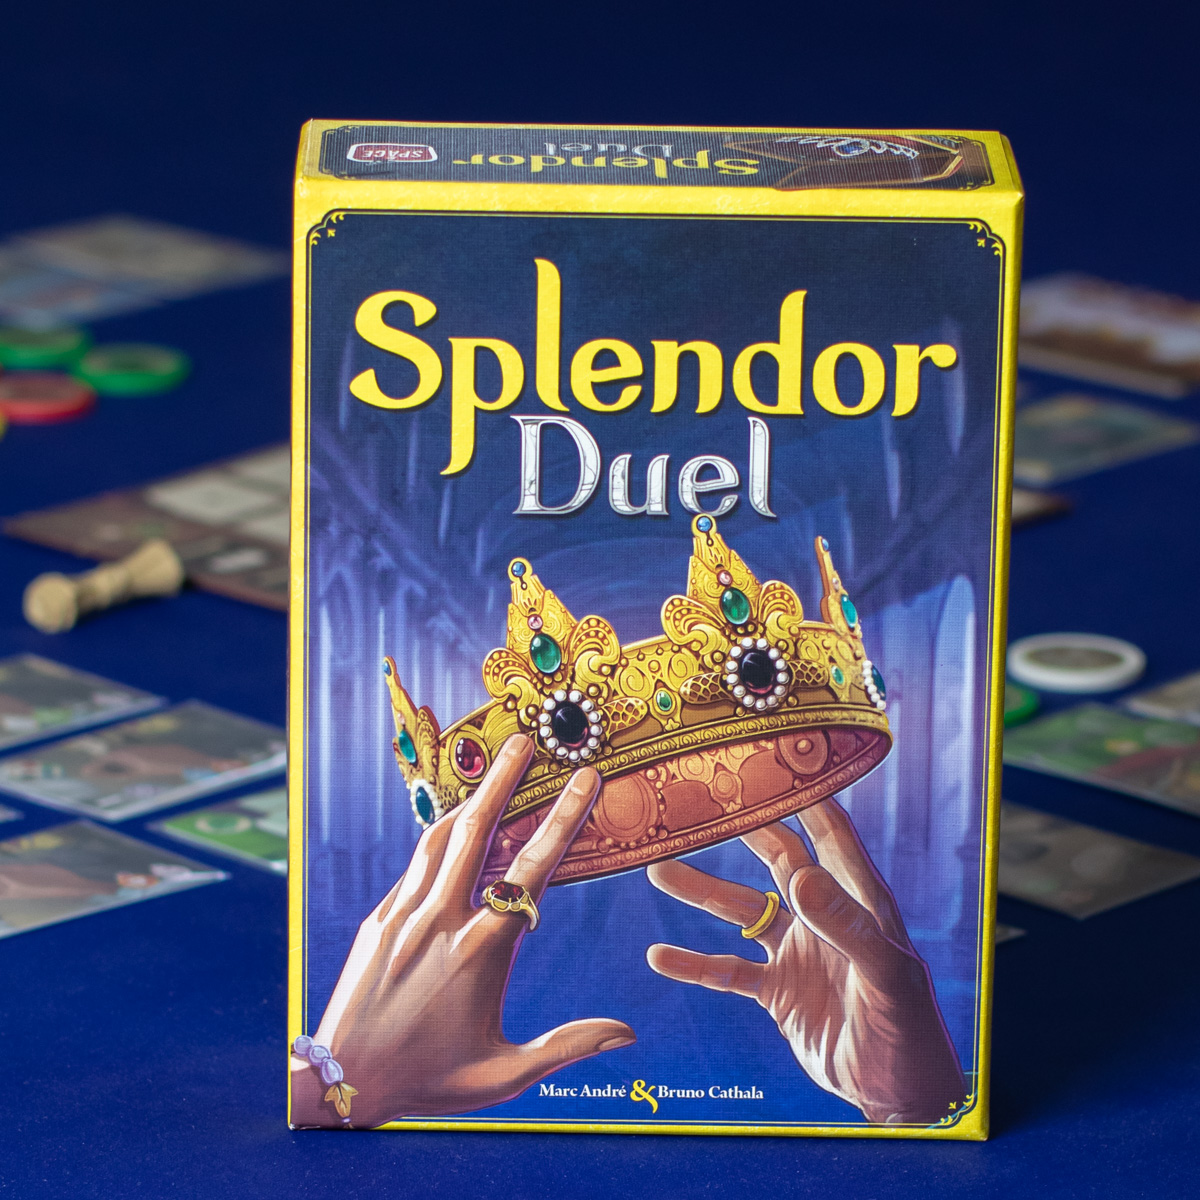 Splendor Duel - Board Game Review 